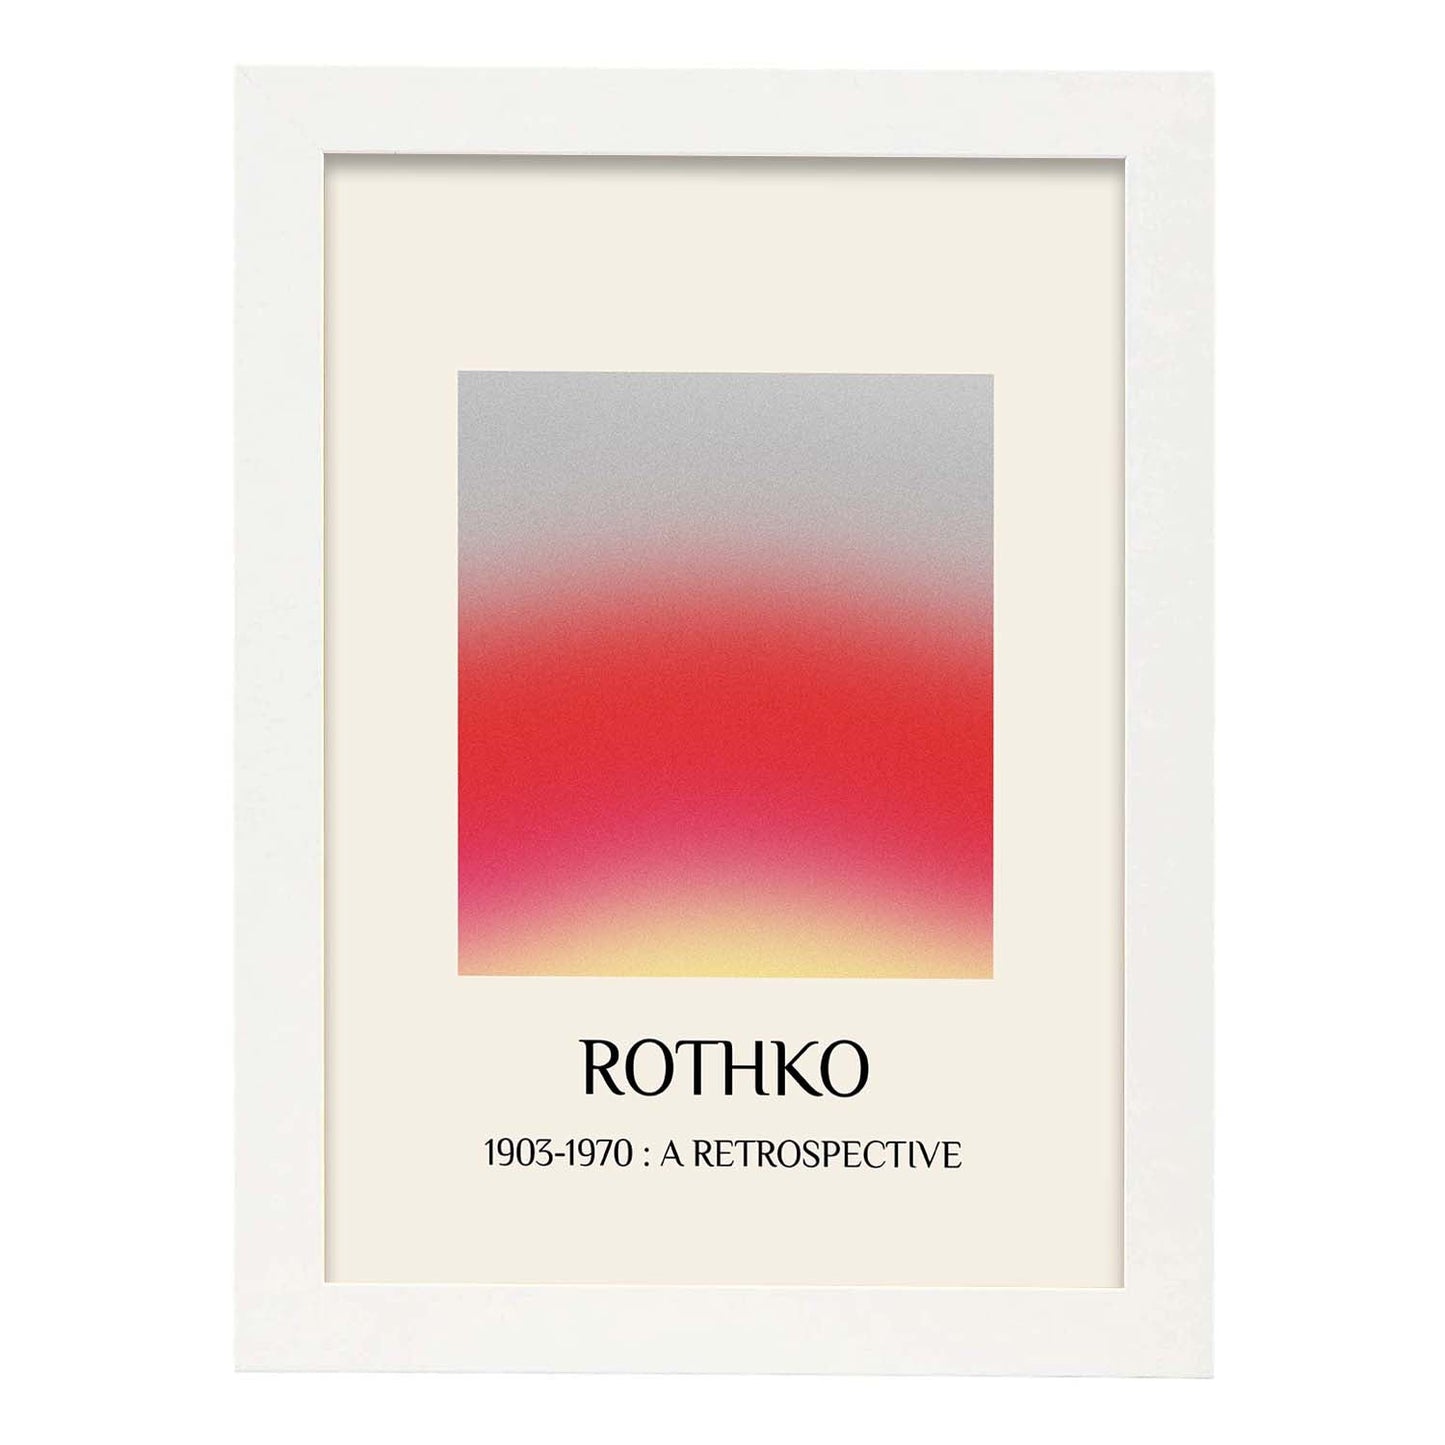 Lamina artistica decorativa con ilustración de Exposición Rothko 5 estilo expresionismo abstracto-Artwork-Nacnic-A3-Marco Blanco-Nacnic Estudio SL